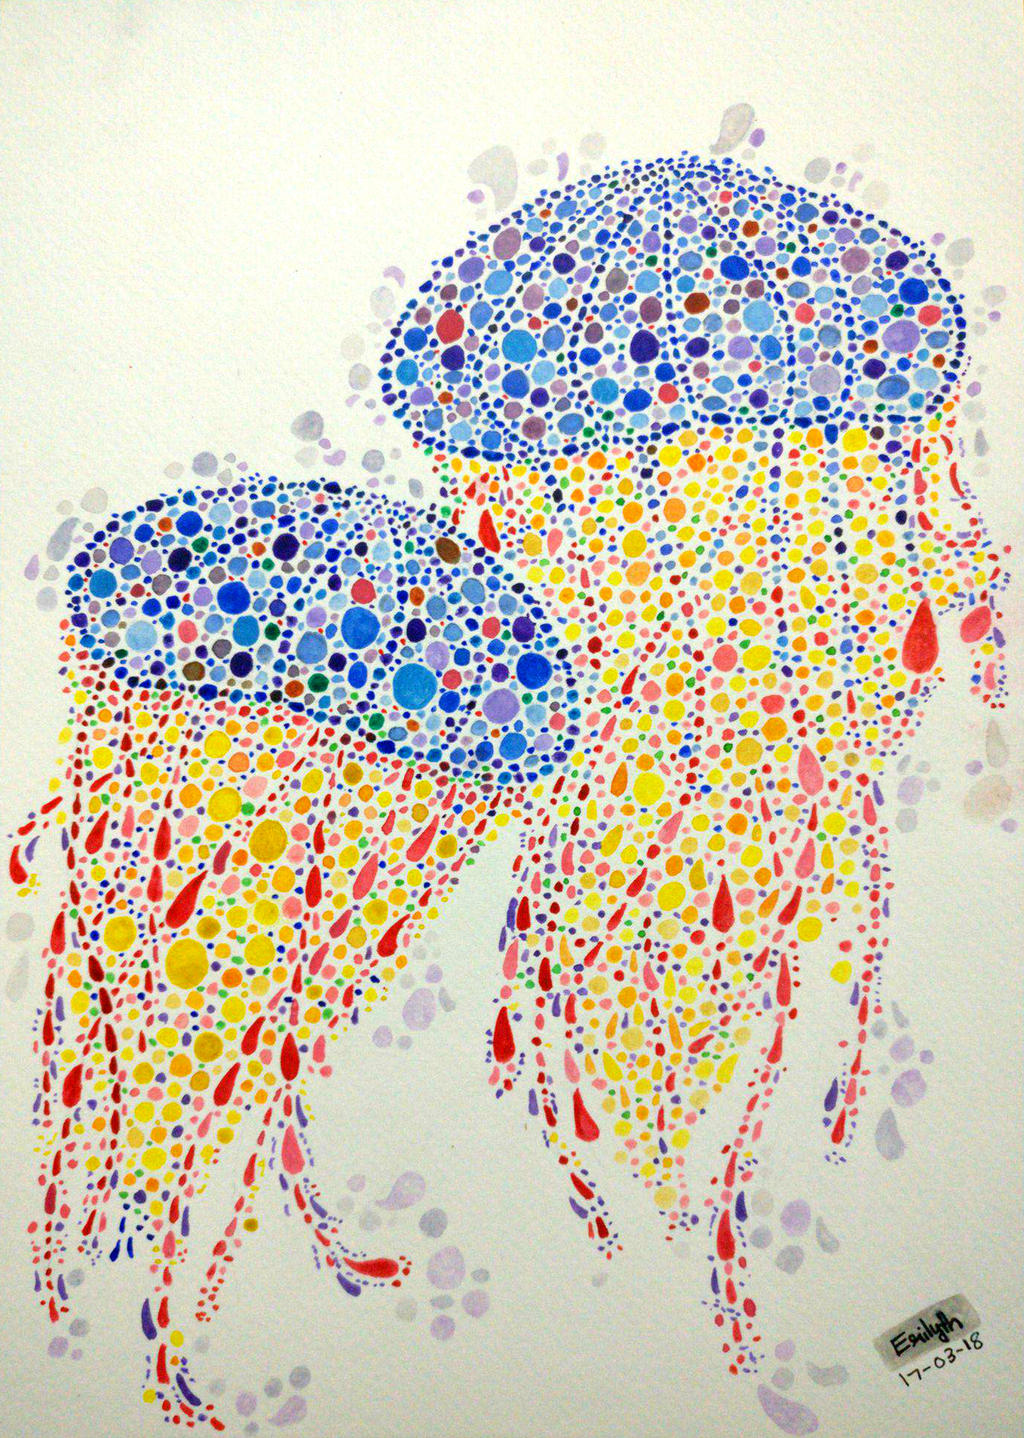 Dot Art - Jellyfish by vishalapr on DeviantArt